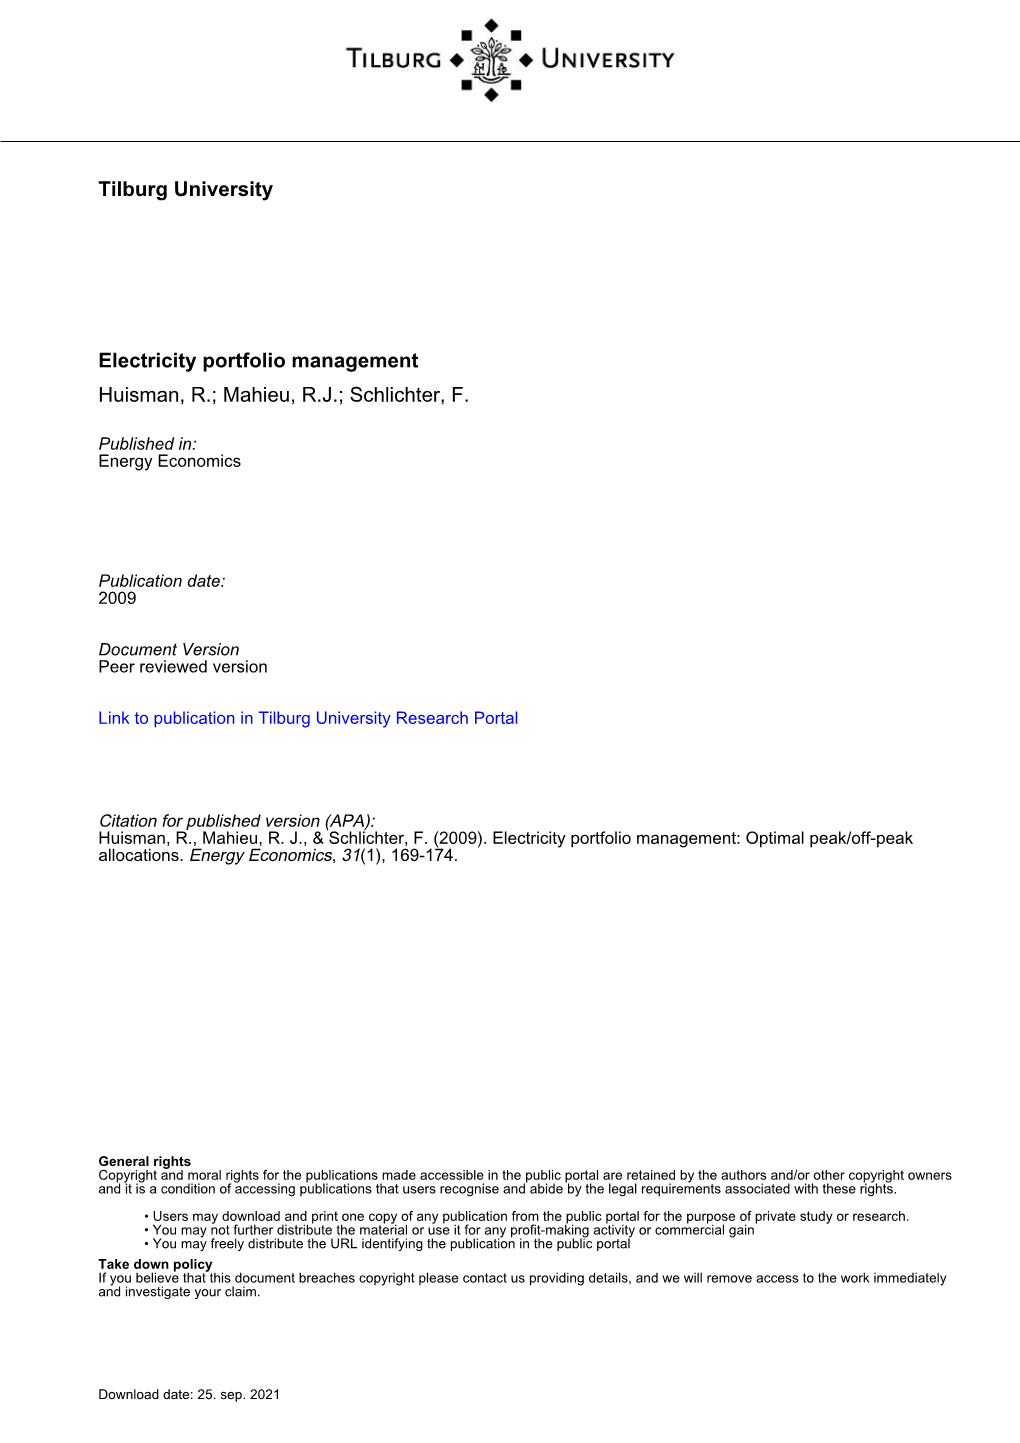 Tilburg University Electricity Portfolio Management Huisman, R.; Mahieu